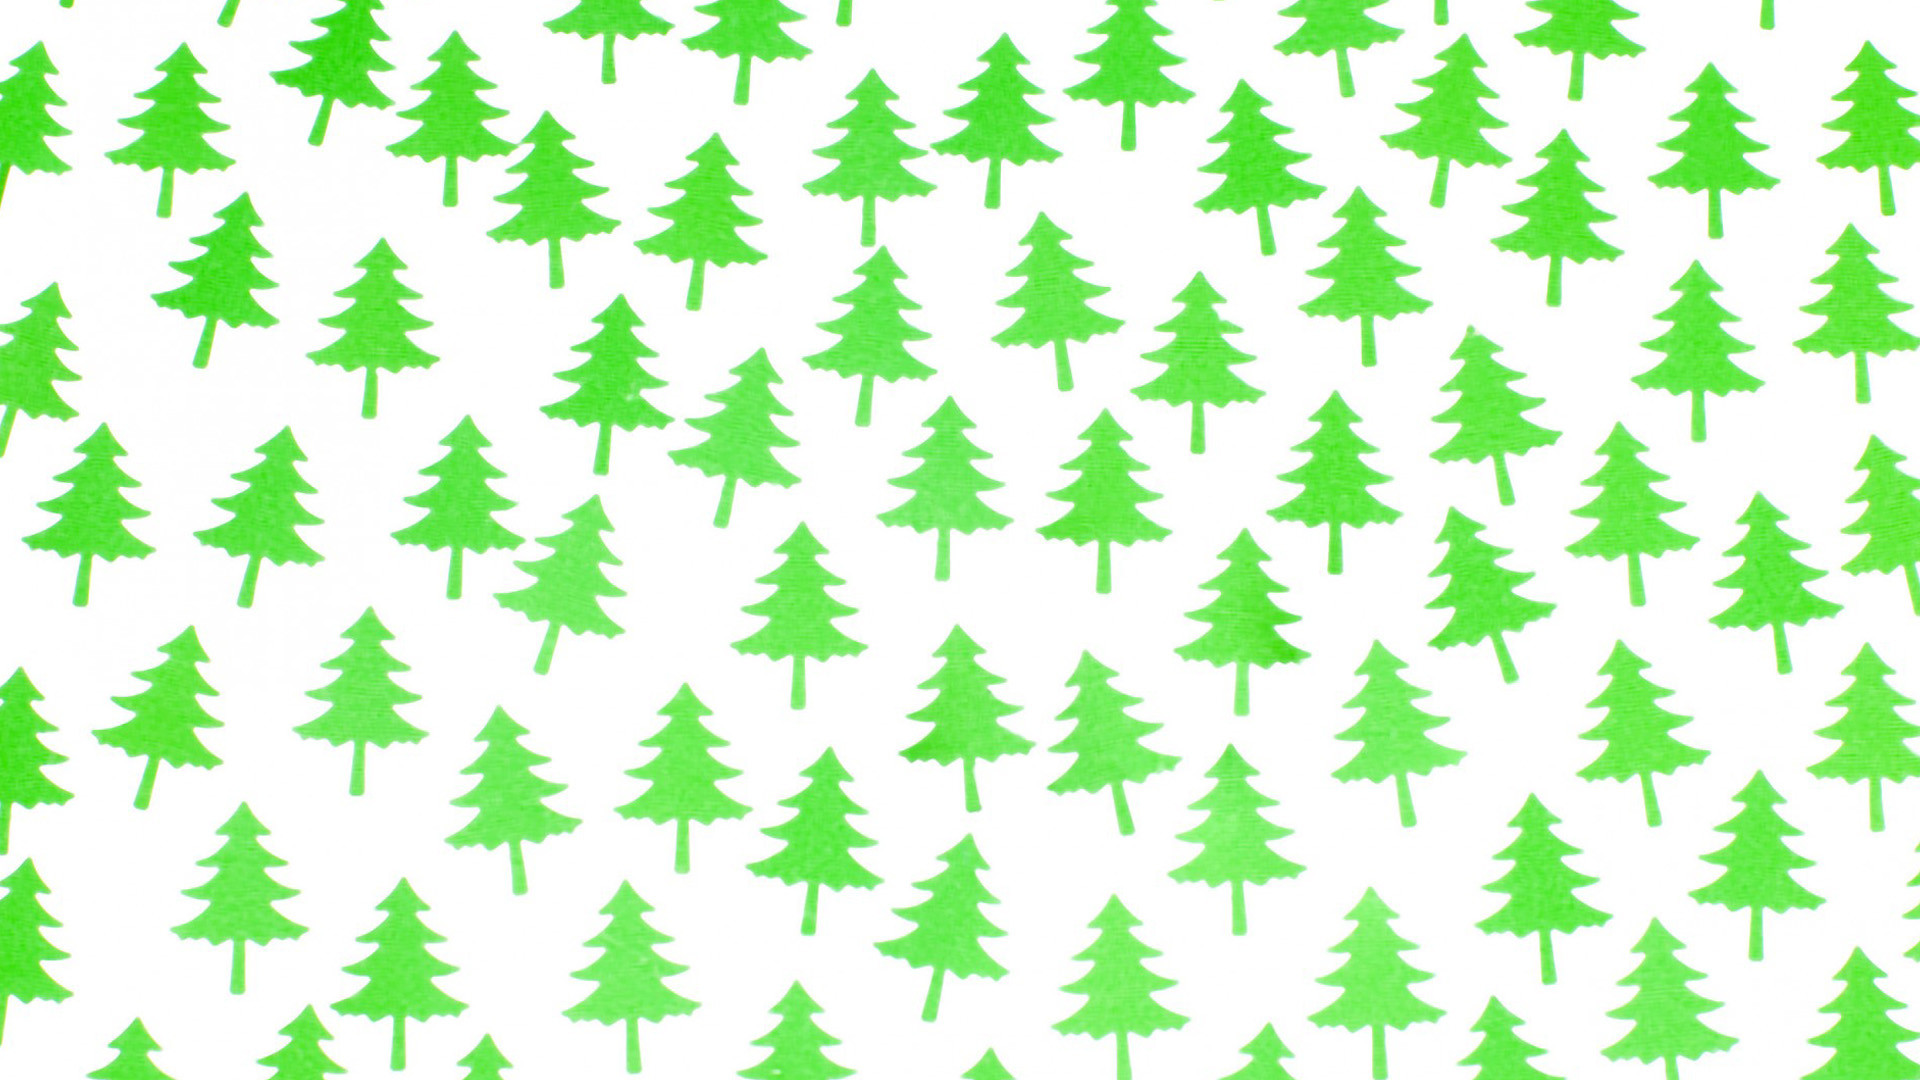 1920x1080 2015 Christmas pattern background